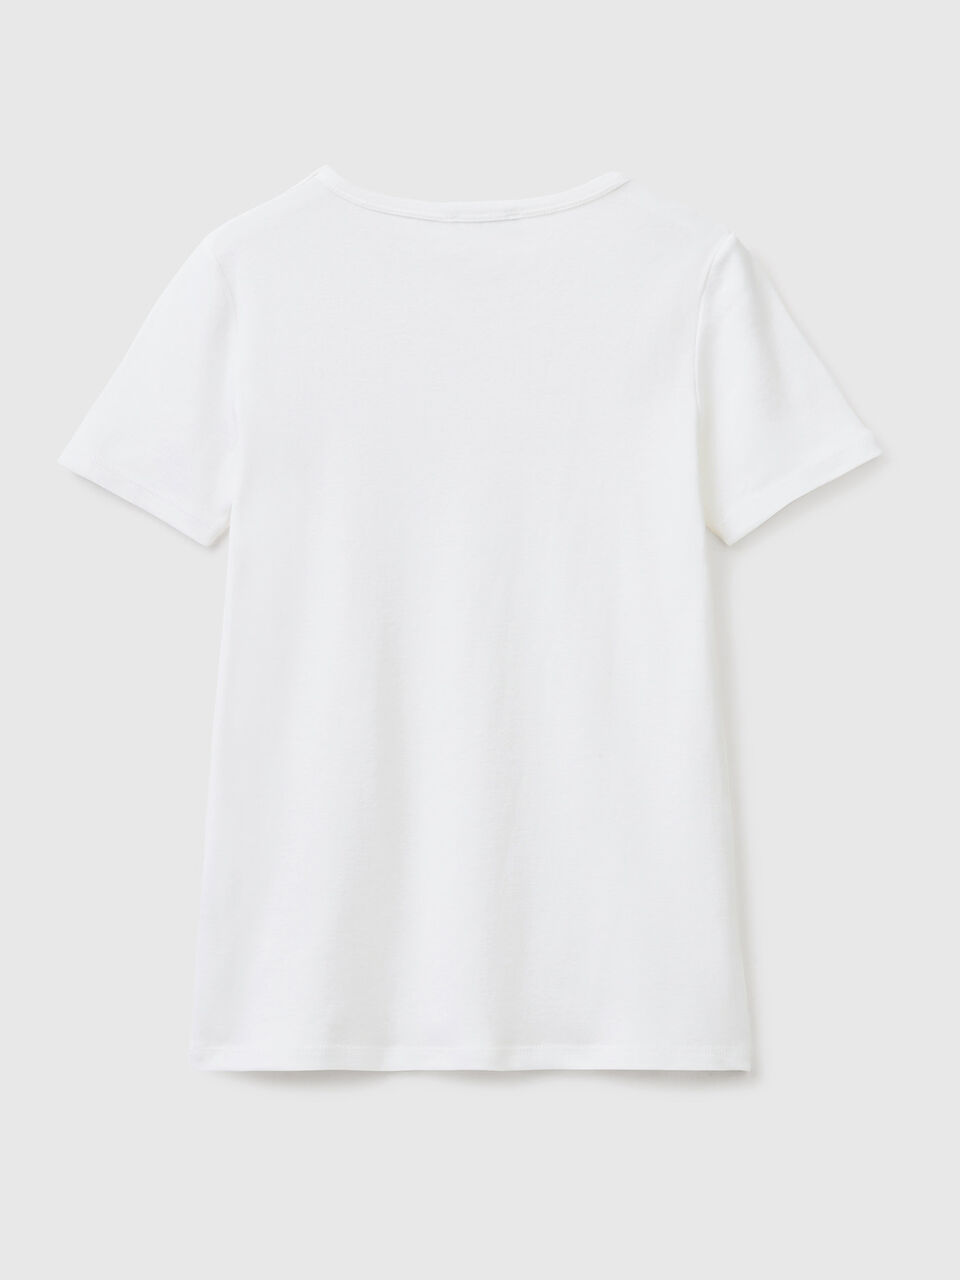 T-shirt in 100% cotton White logo | - print Benetton glitter with